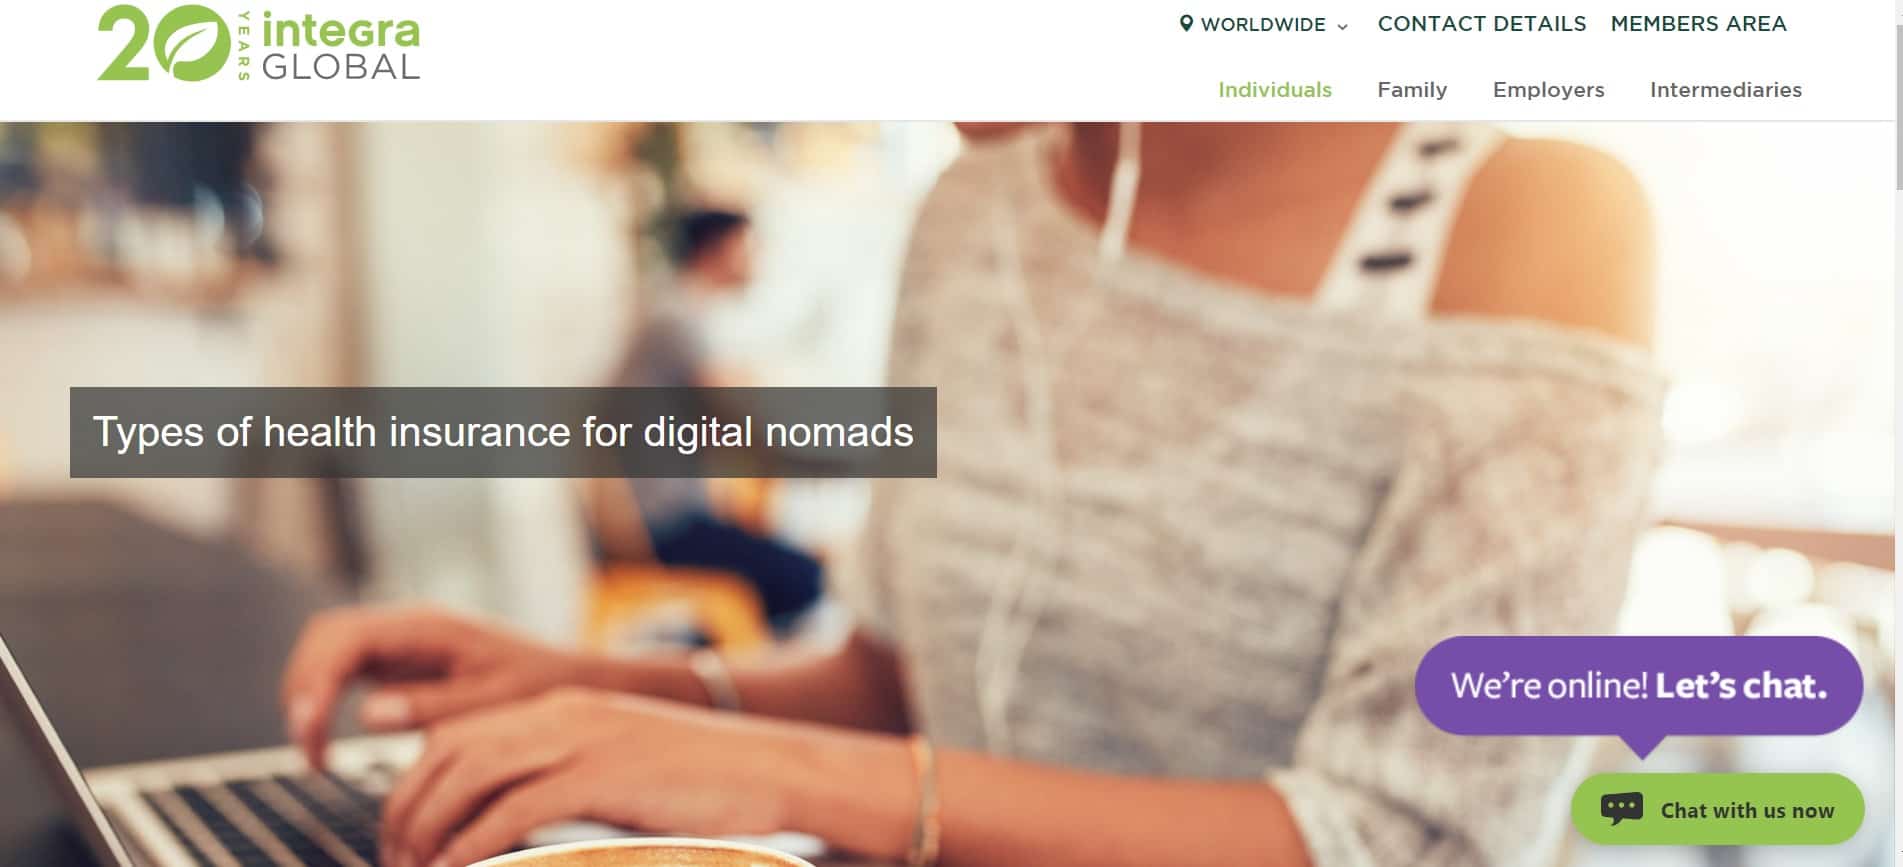 Integra Global - Digital Nomad Insurance